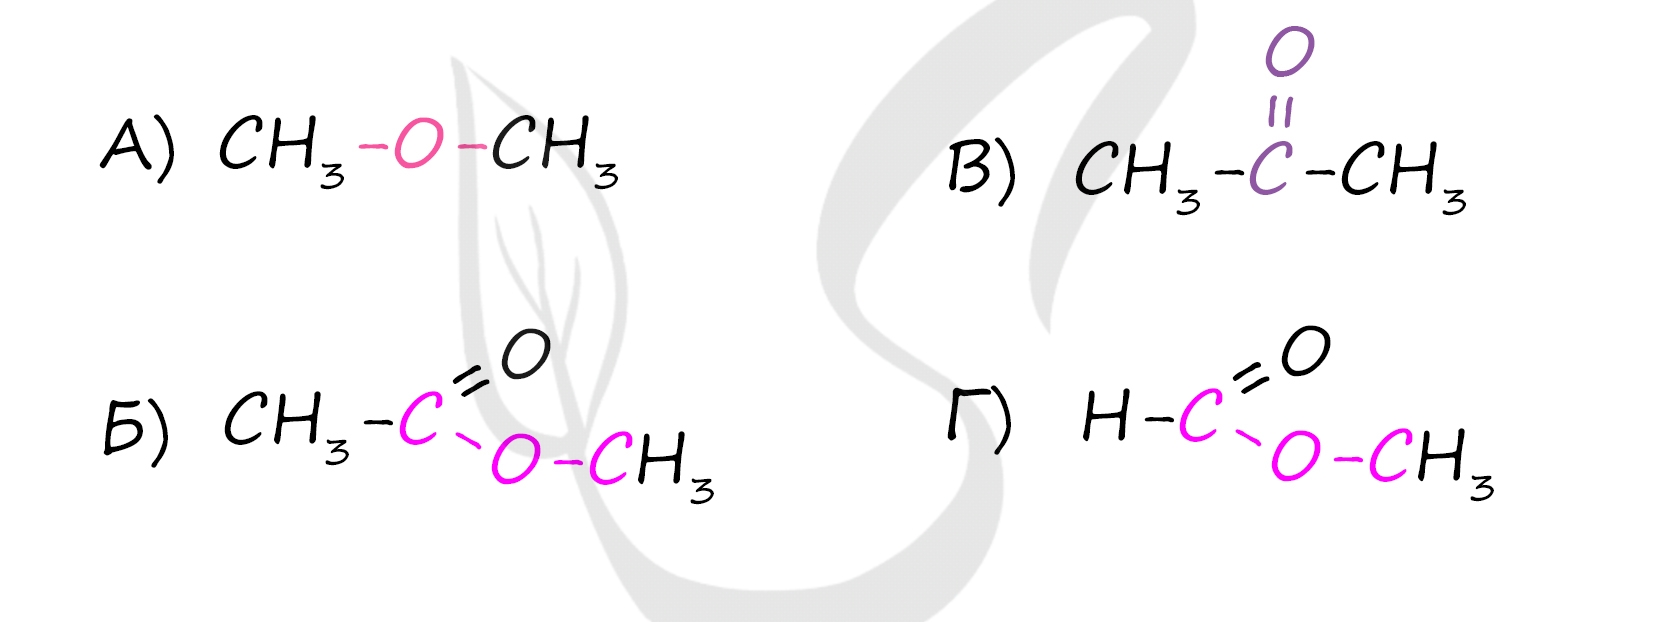 диметиловый эфир, метилацетат, ацетон, метилформиат